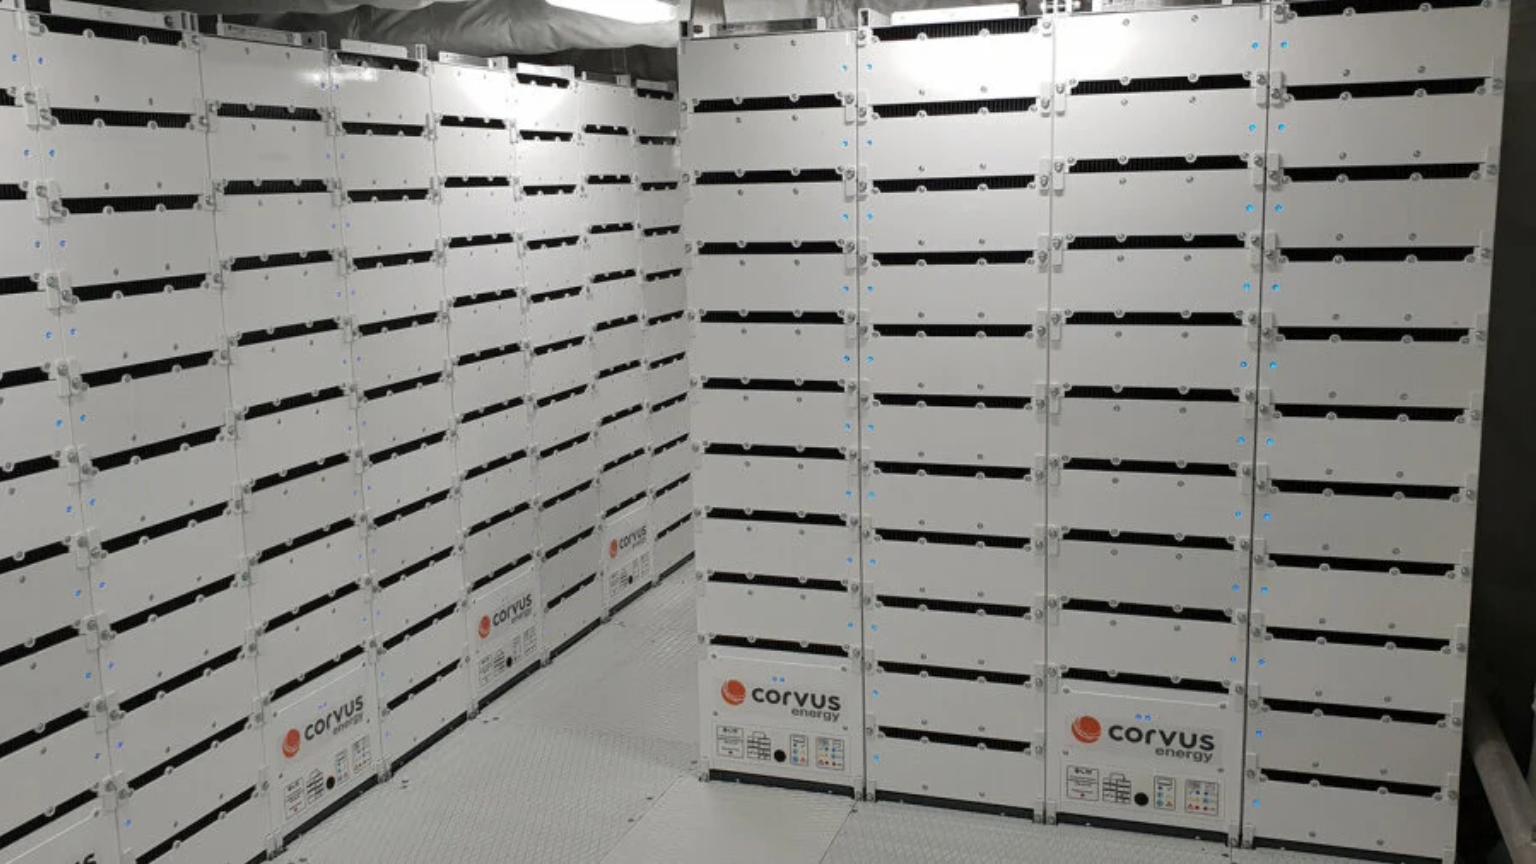 Corvus storage